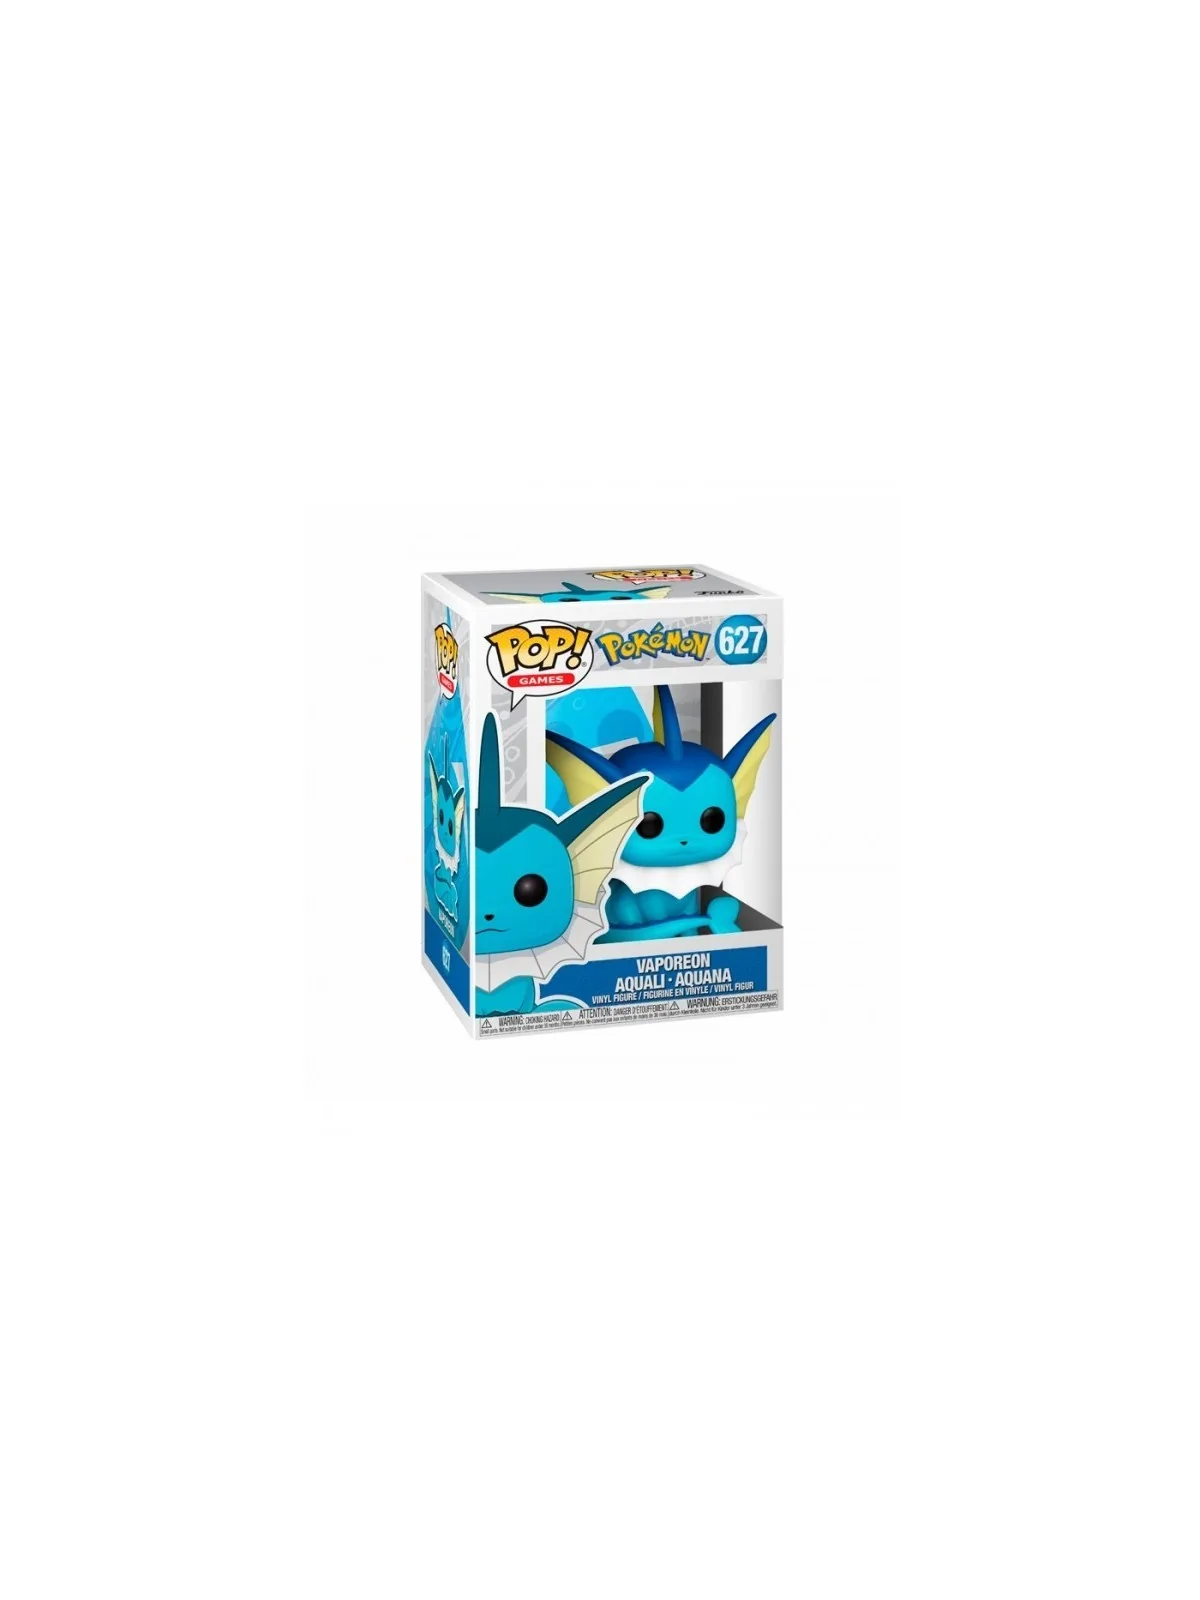 Comprar Funko POP! Vaporeon Pokémon (627) barato al mejor precio 17,00